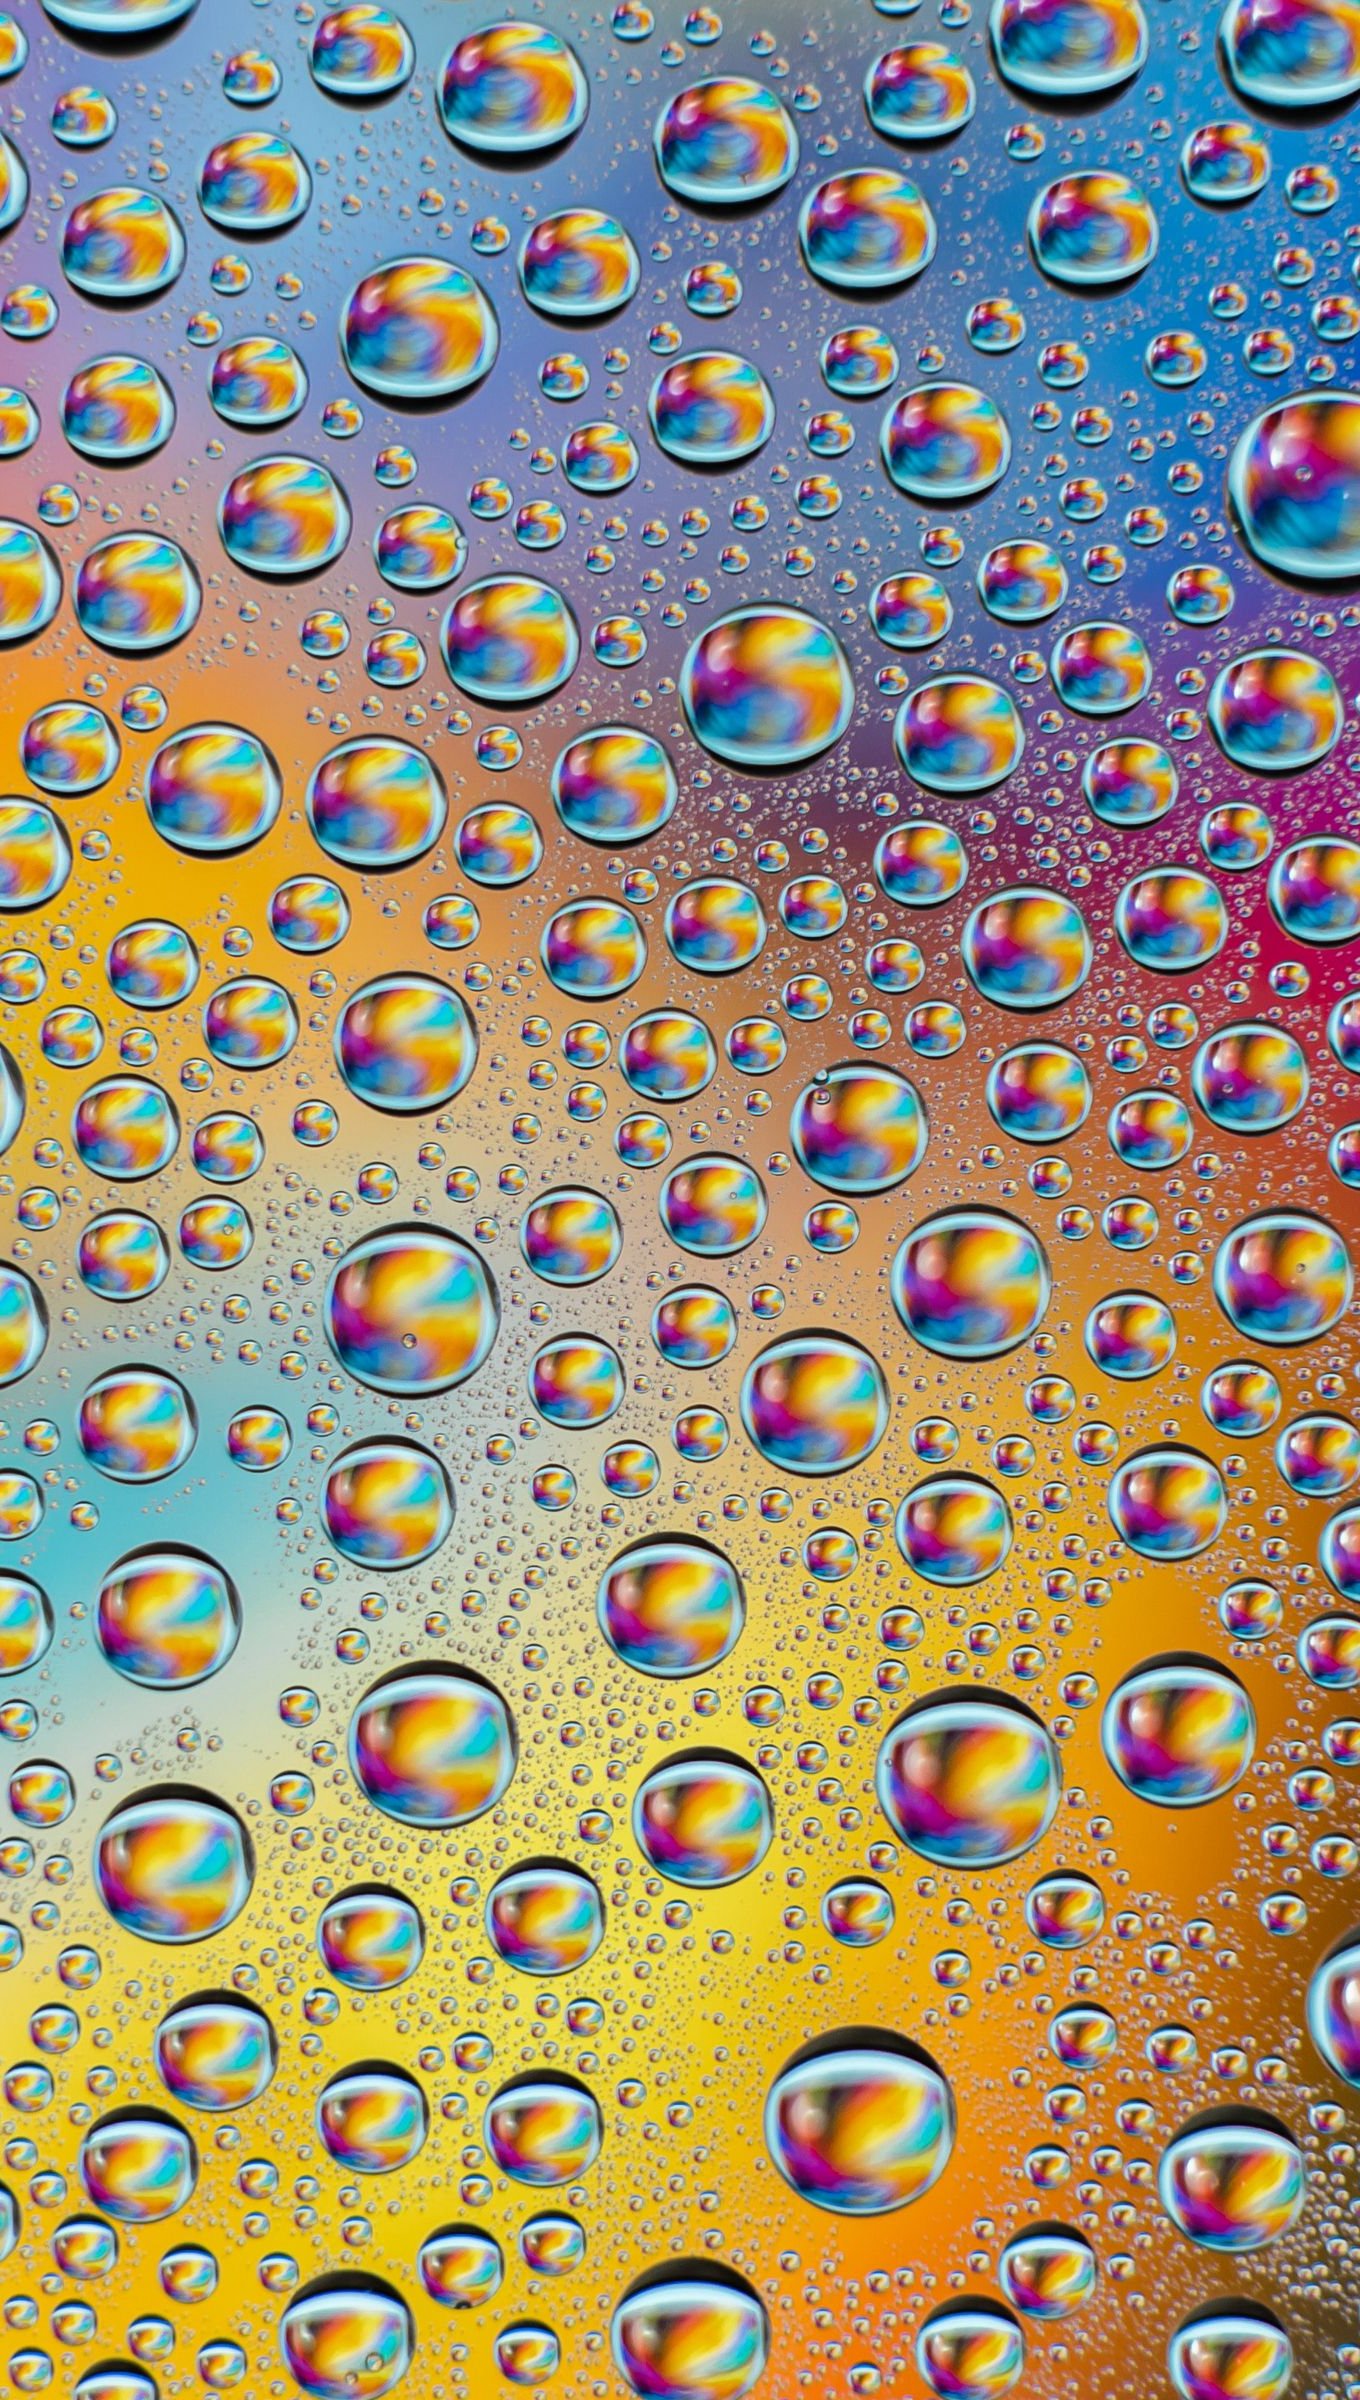 Drops with rainbow colors Wallpaper 4k Ultra HD ID:5793